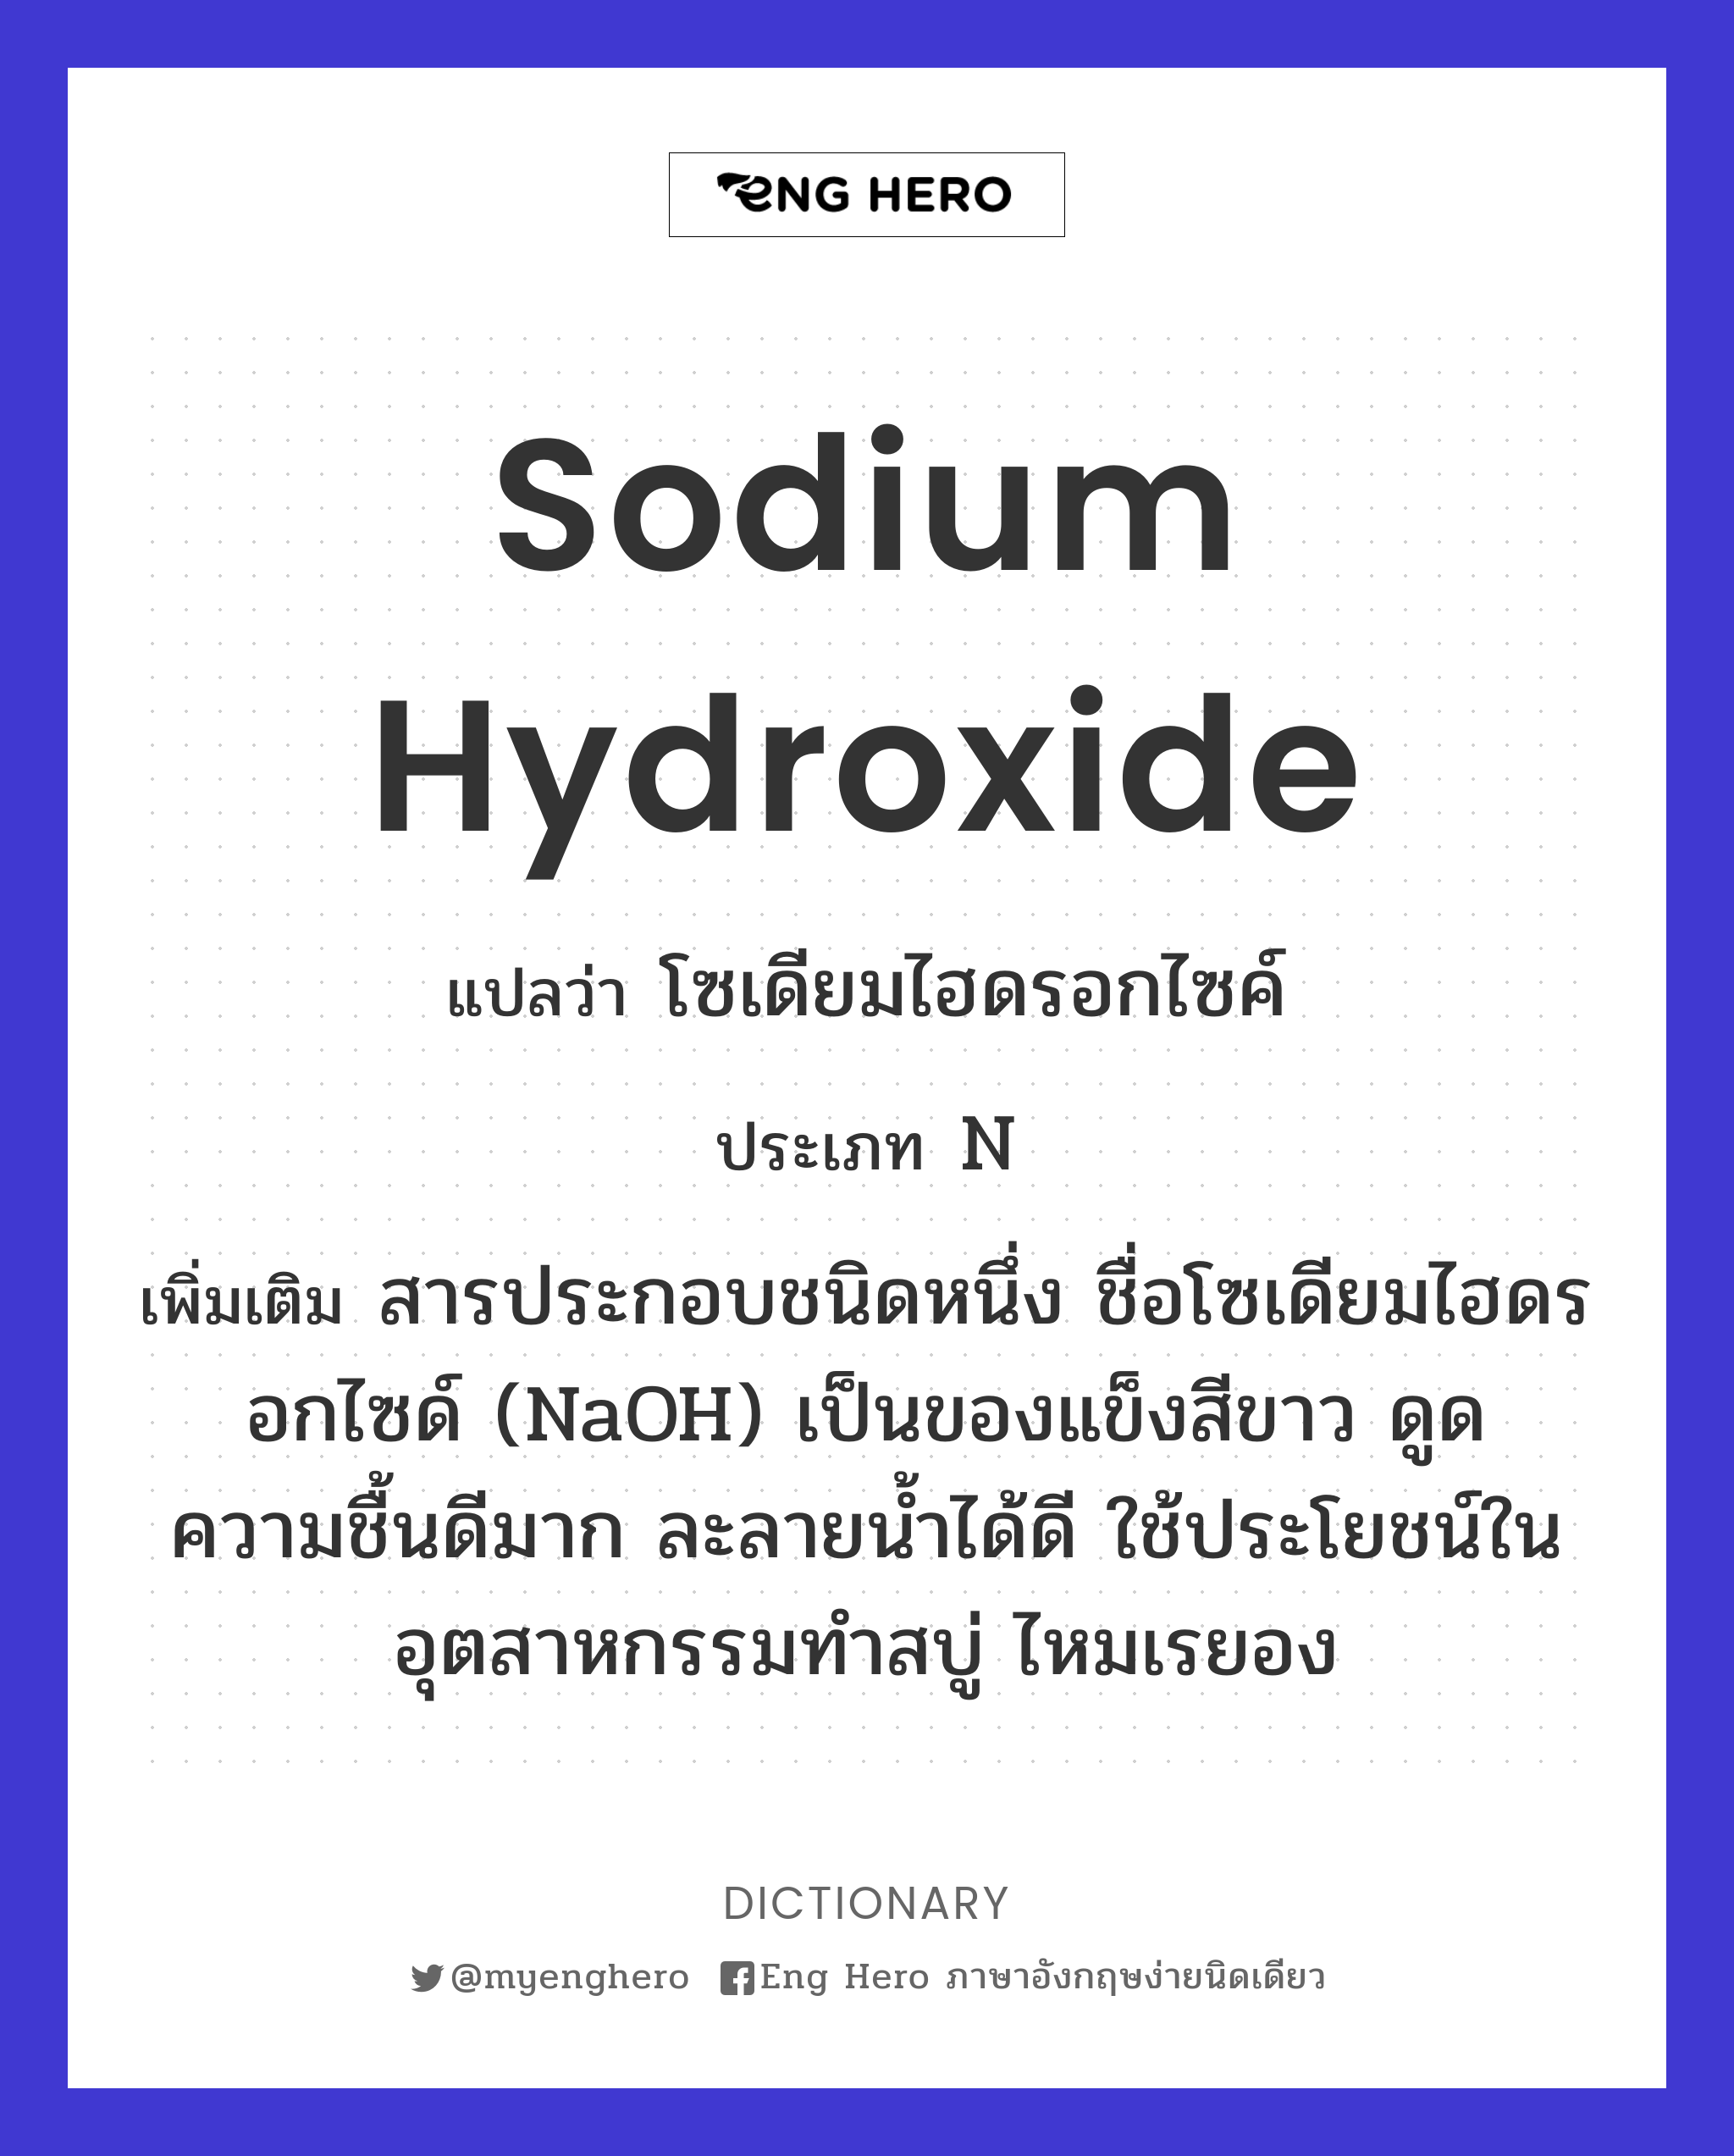 sodium hydroxide